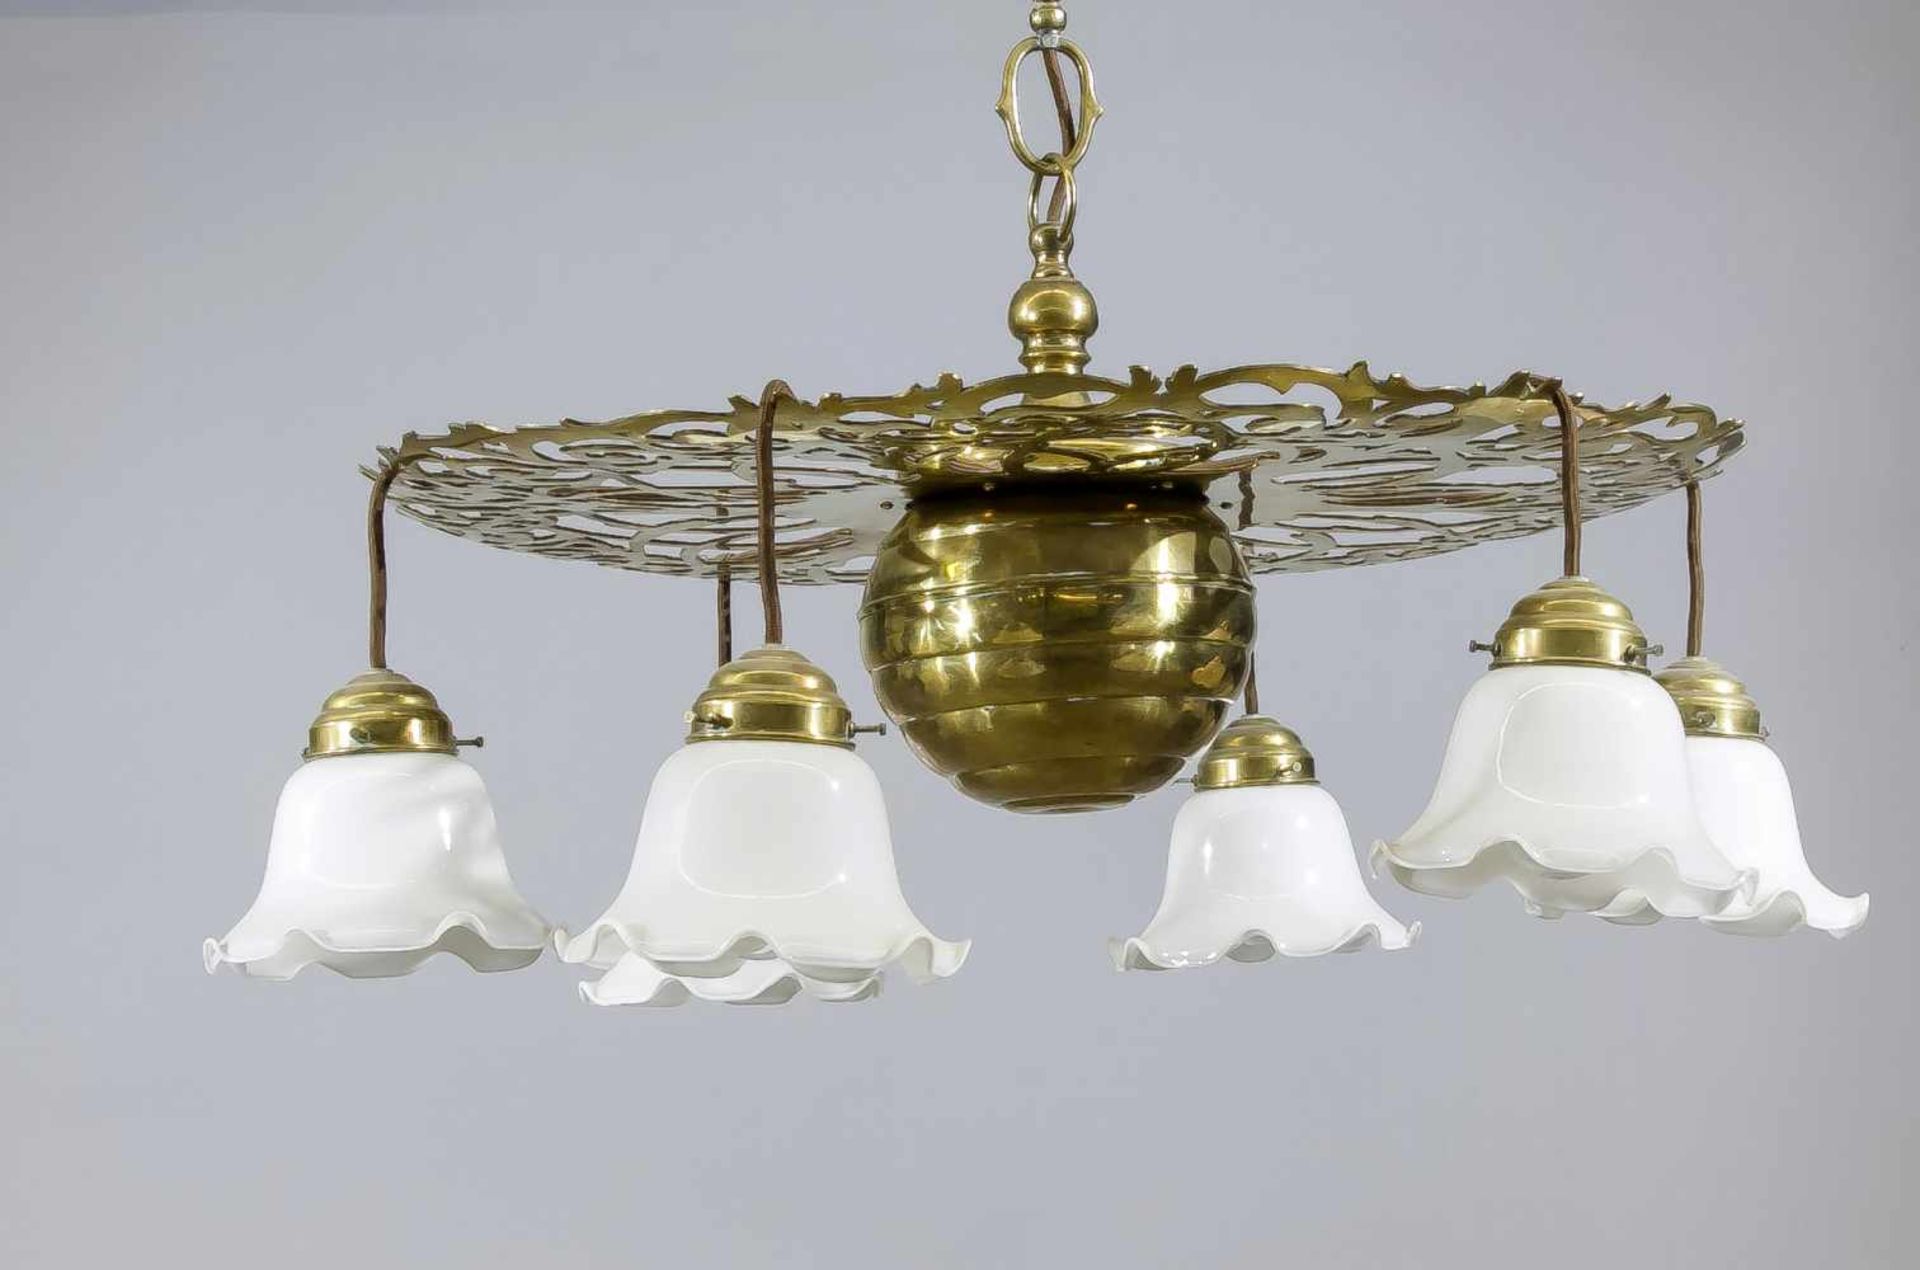 Jugendstil-Deckenlampe, um 1910, Entwurf wohl Richard Riemerschmid, elektr., 6-flg.,ornamental